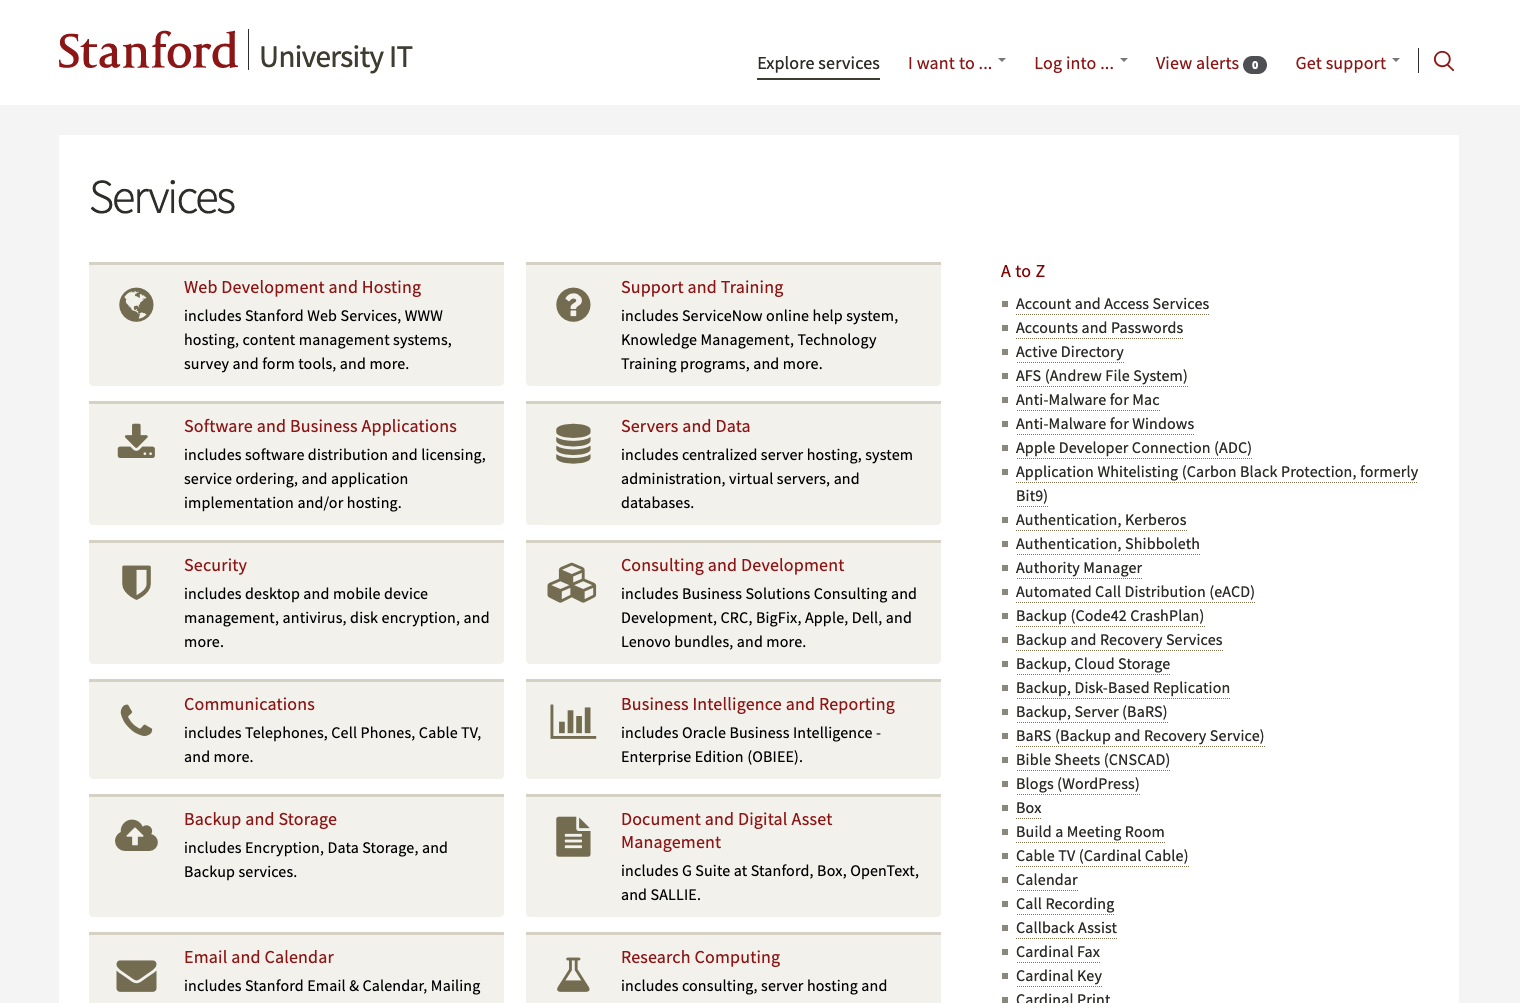 Service catalog of Stanford University